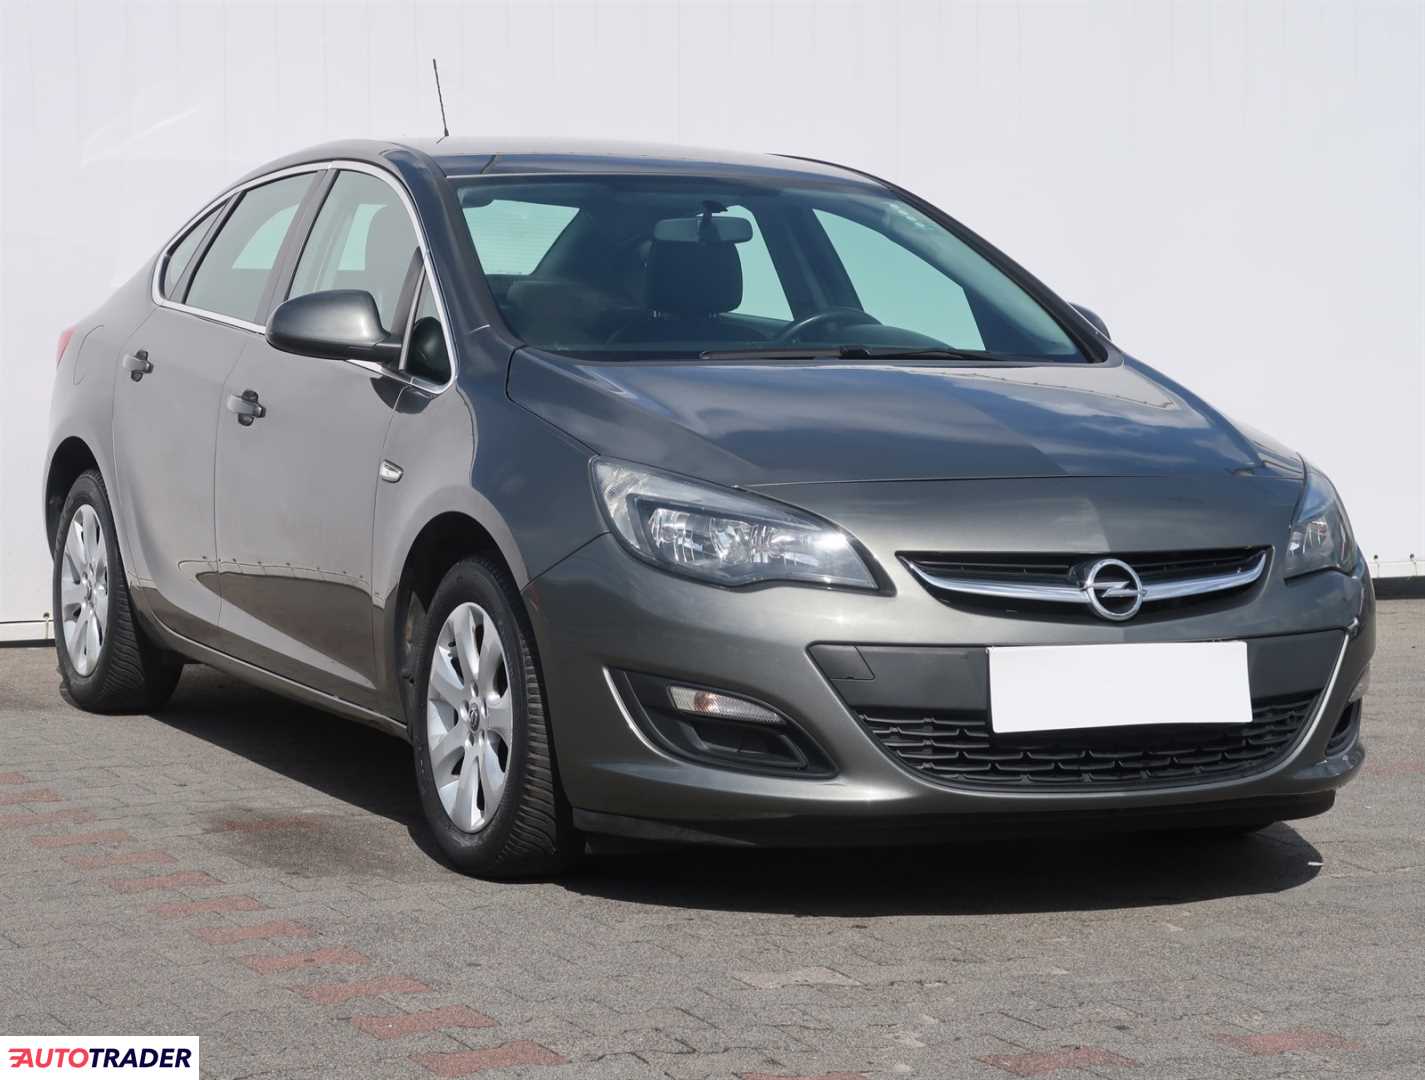 Opel Astra 2016 1.4 138 KM